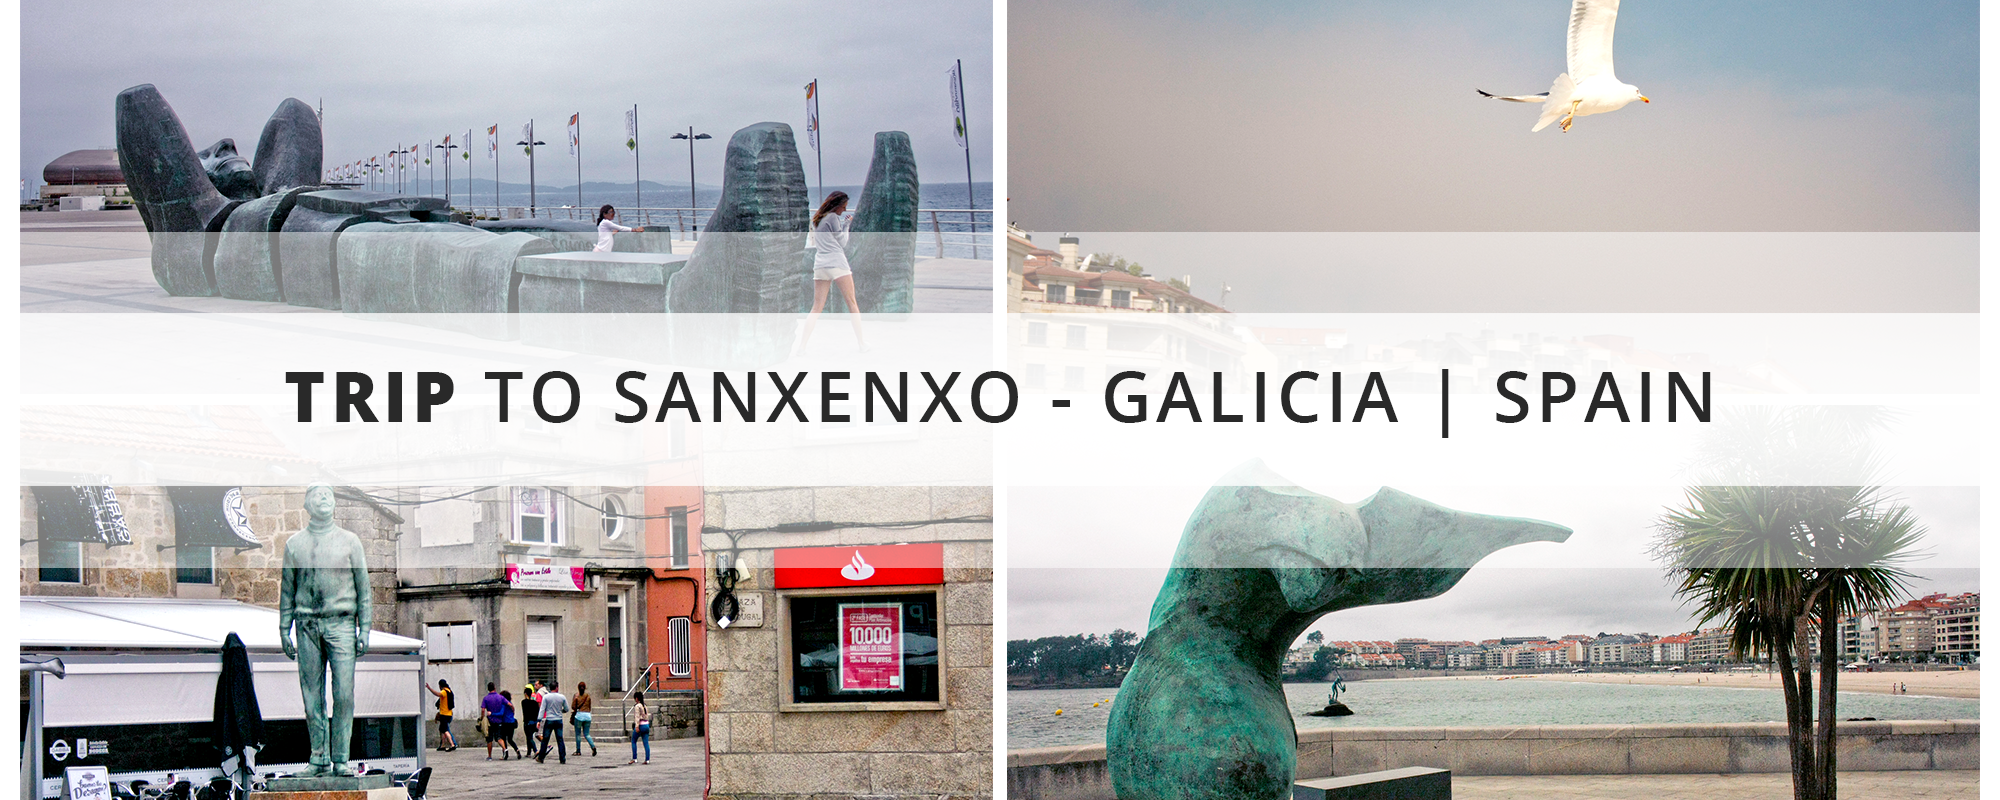 Trip to Sanxenxo - Galicia | Spain